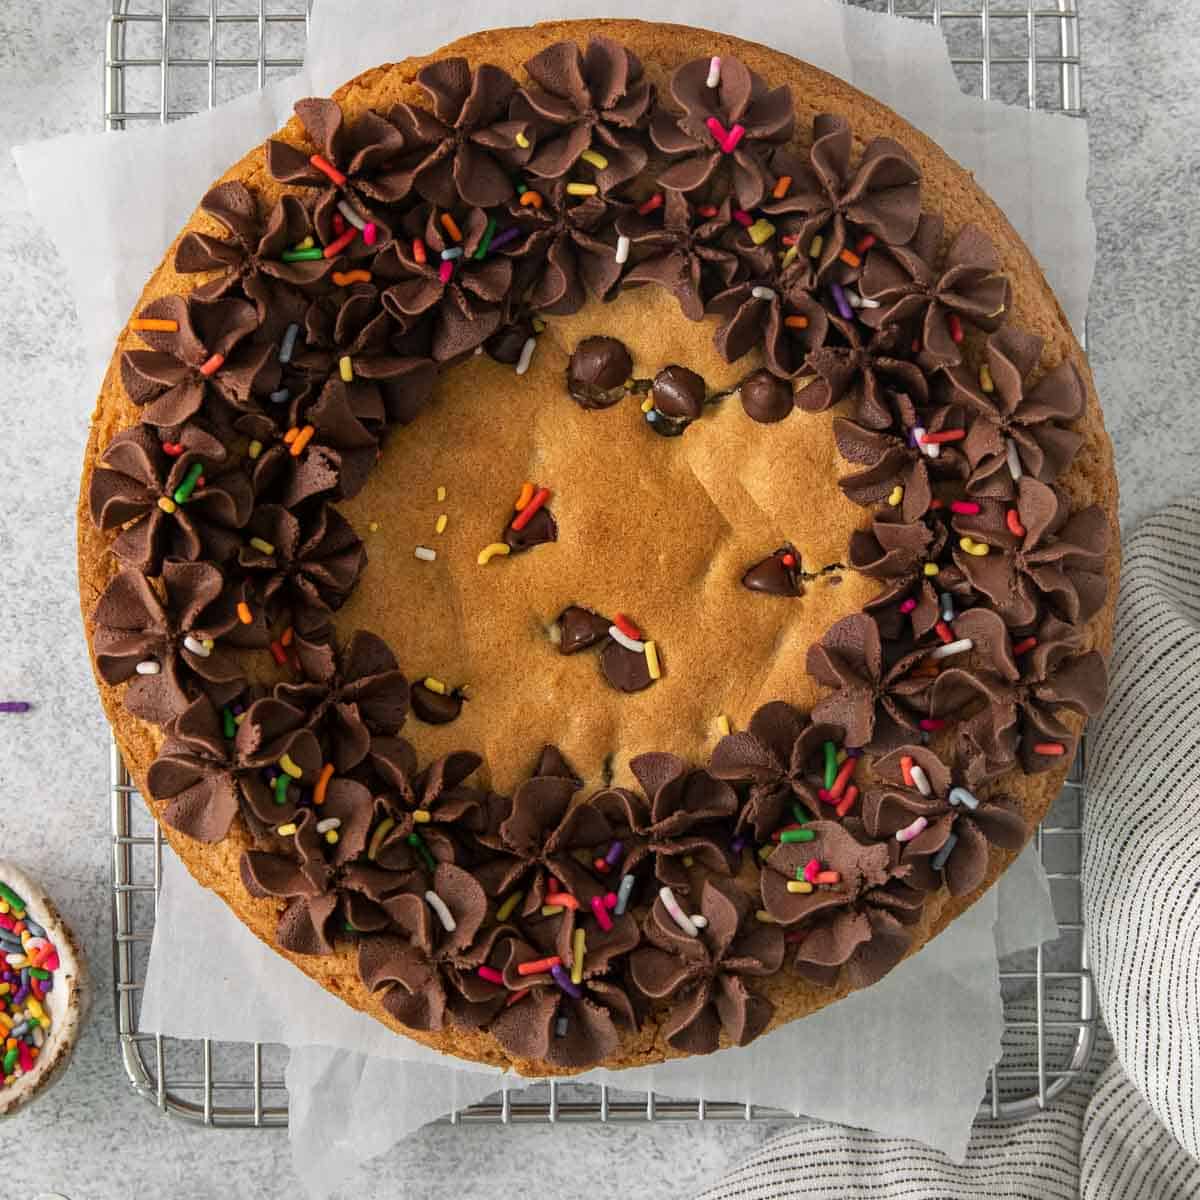 https://meaningfuleats.com/wp-content/uploads/2023/05/gluten-free-cookie-cake-recipe-1.jpg